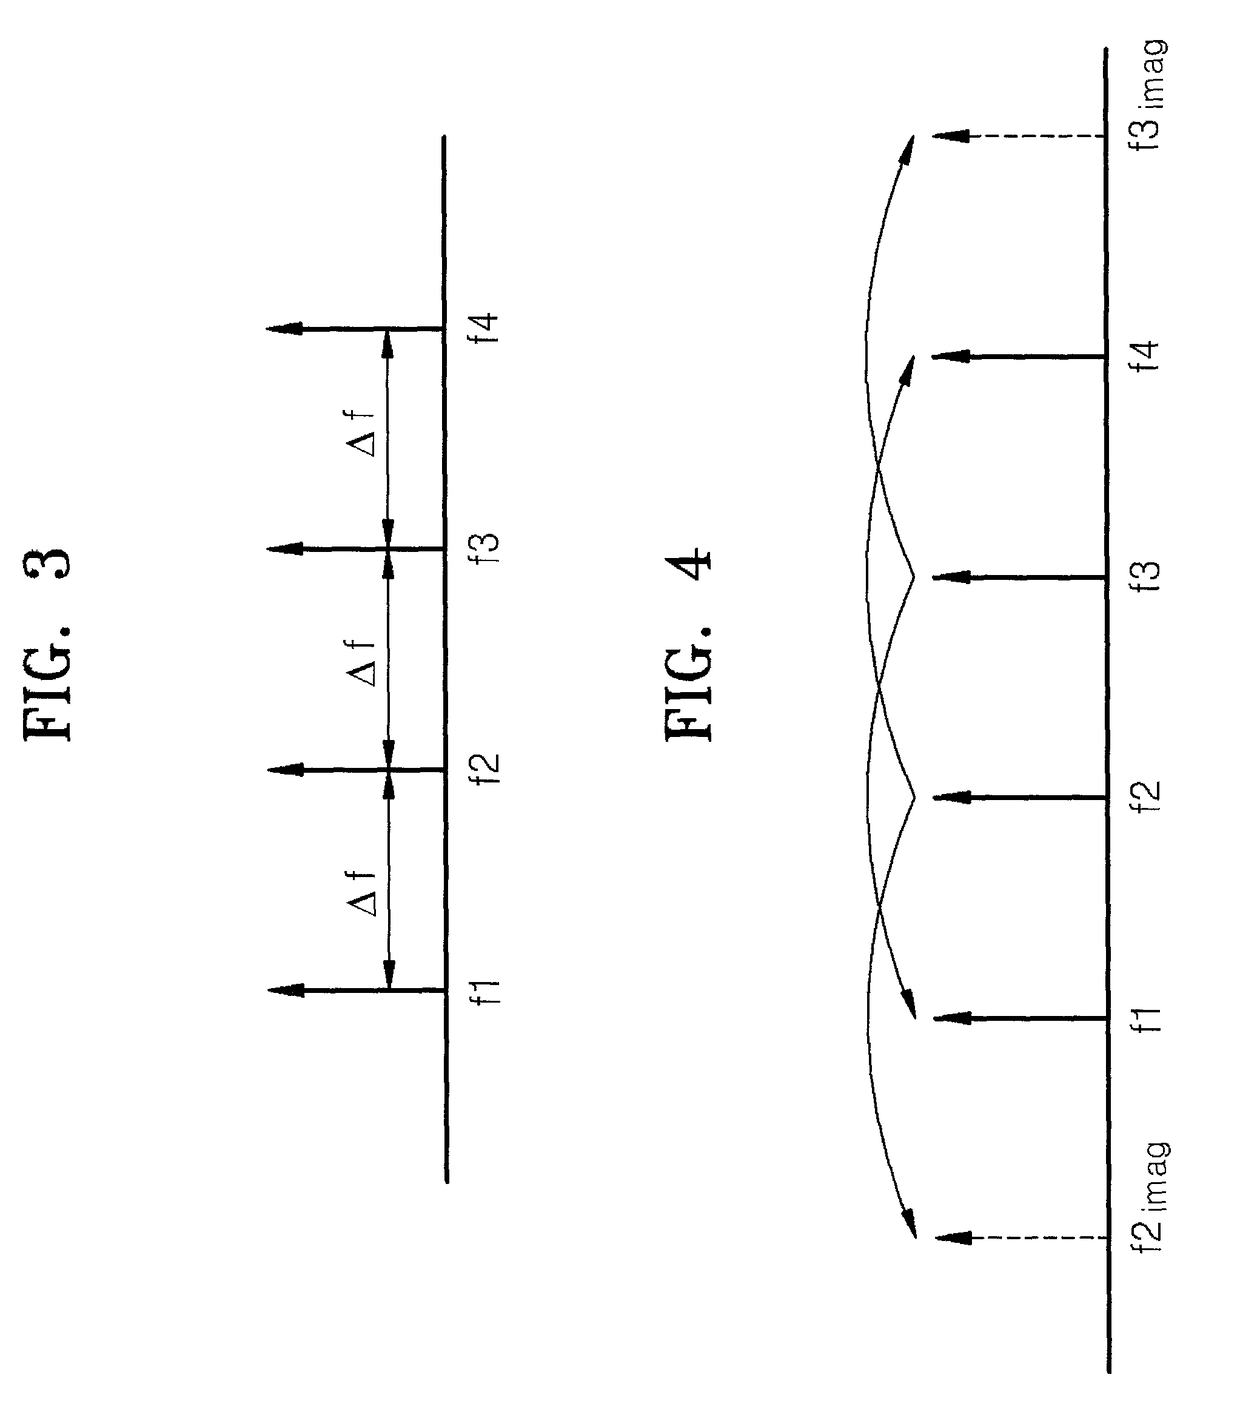 Multi-output oscillator using single oscillator